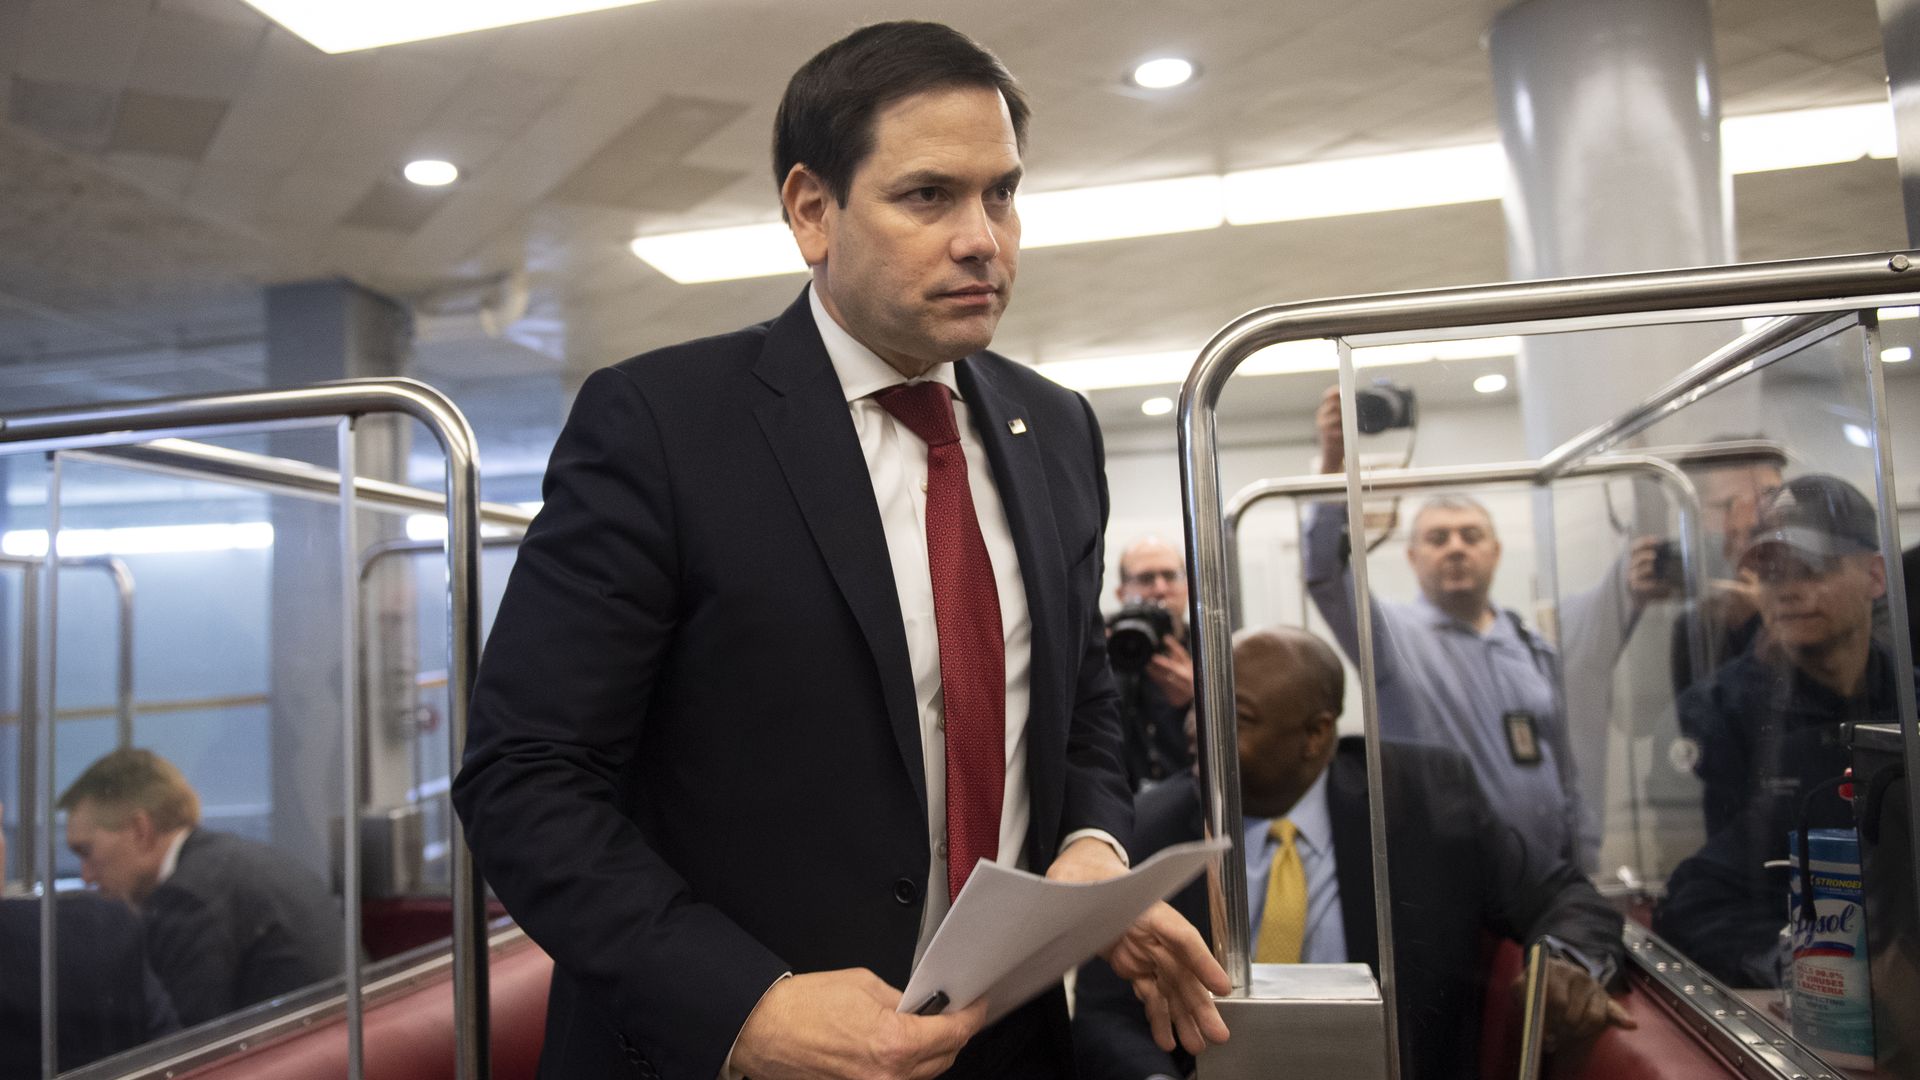 Sen. Marco Rubio, R-Fla., exits a subway cart in the Senate subway